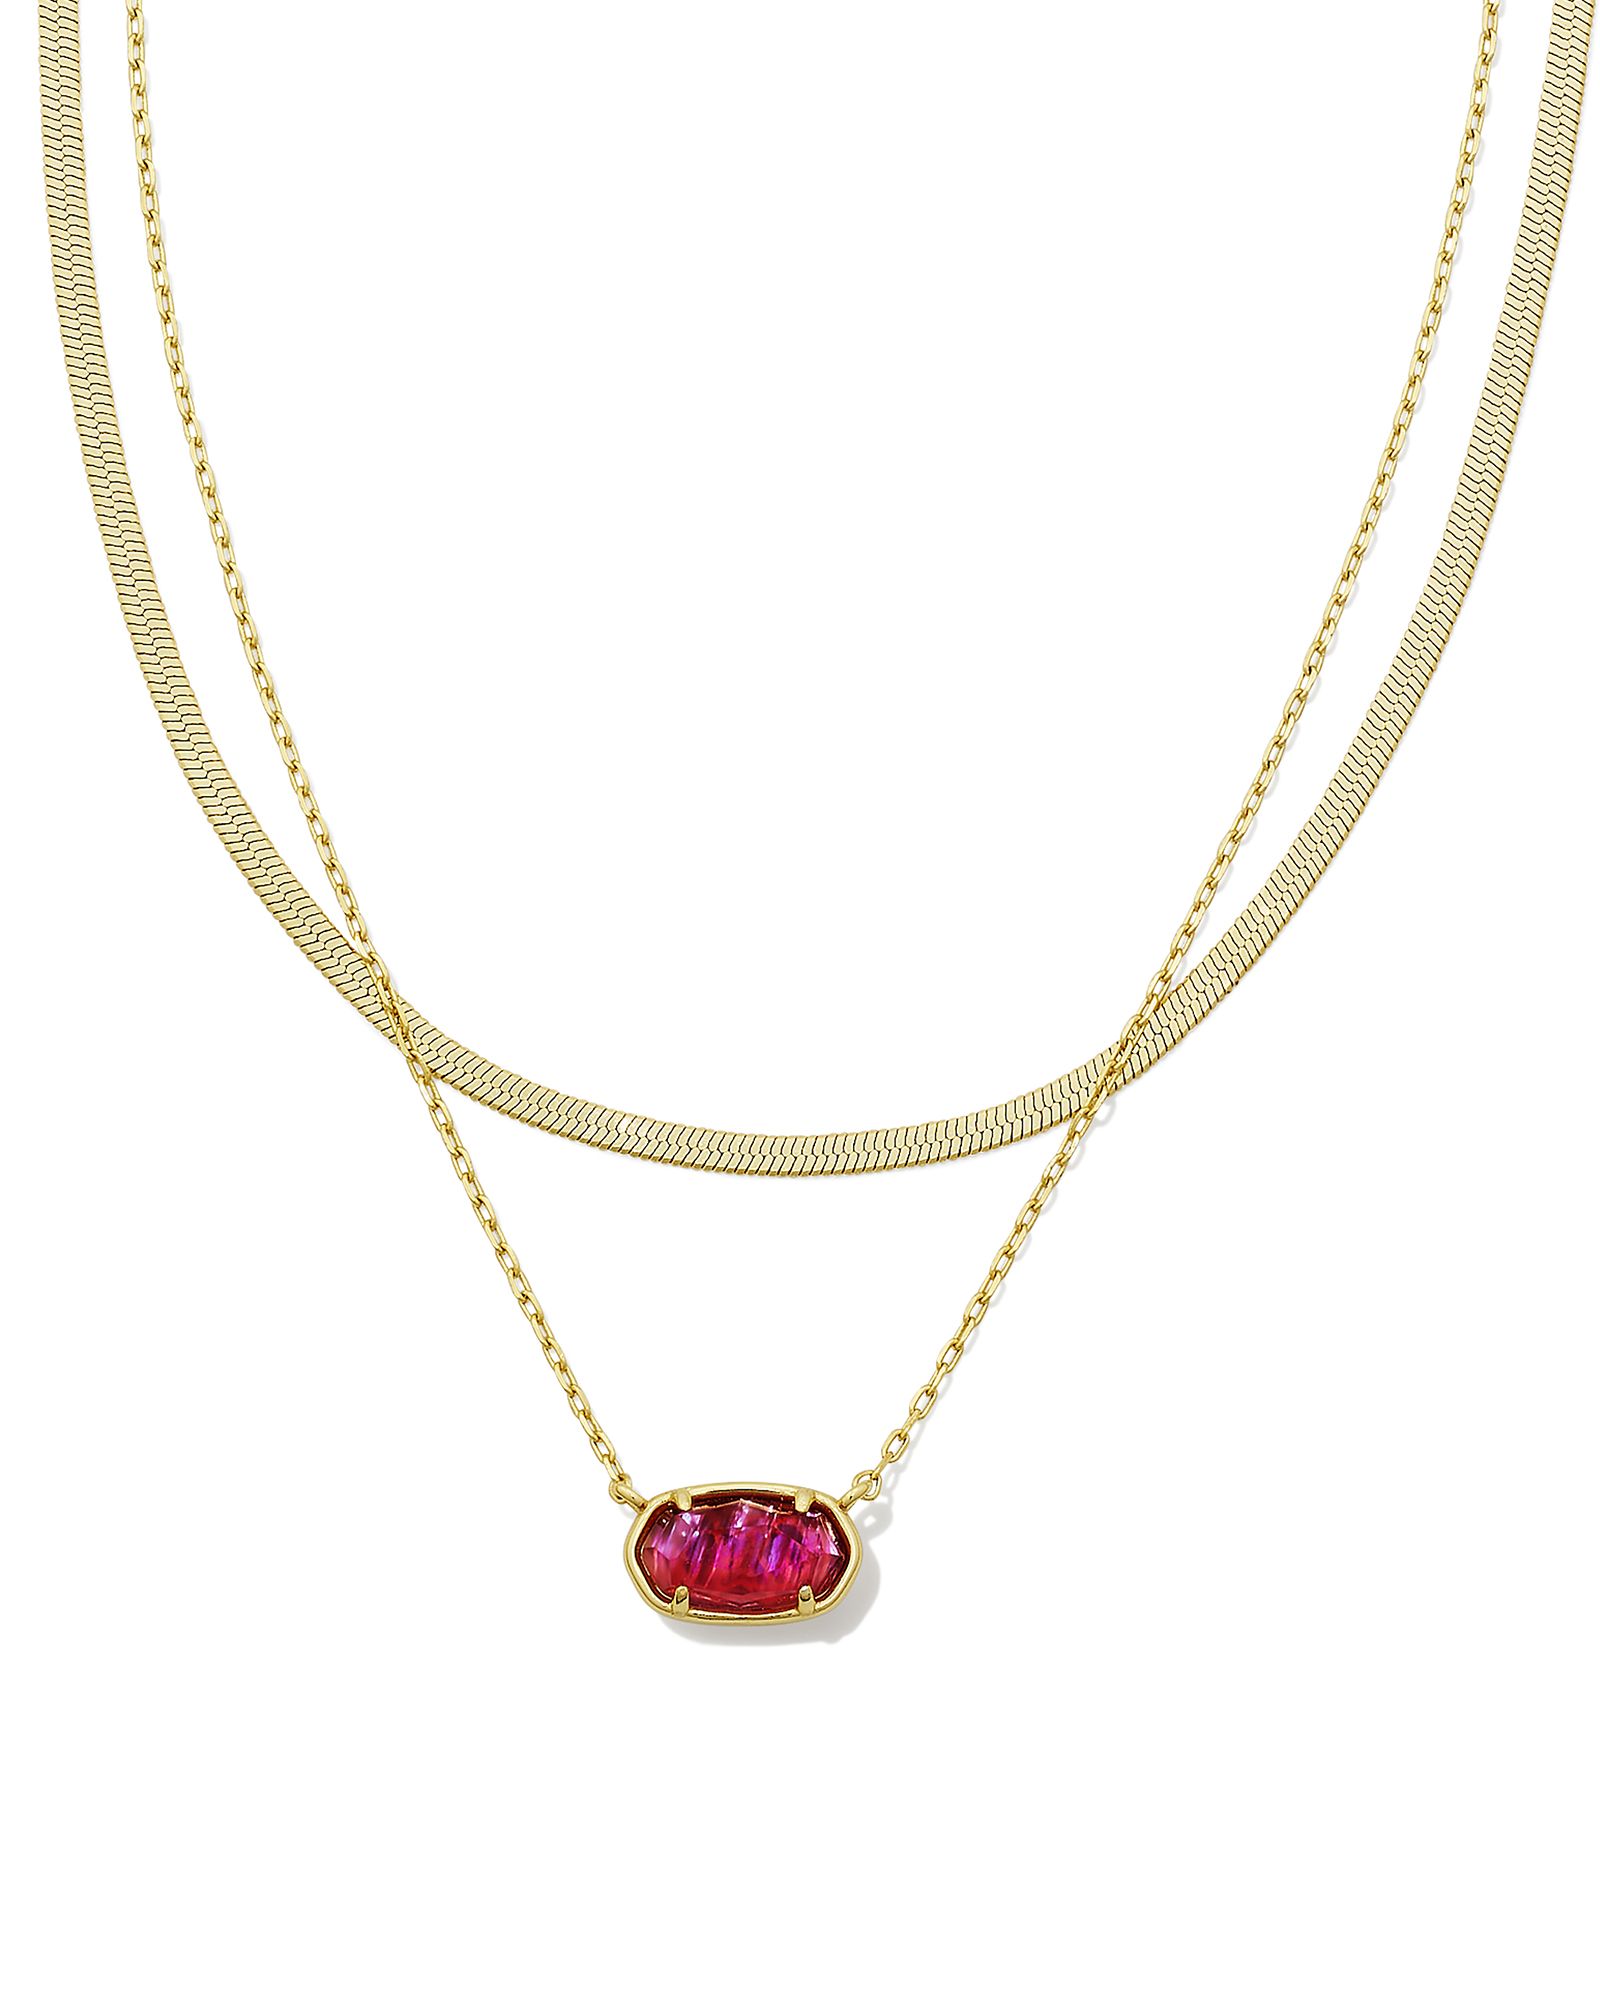 Grayson Herringbone Gold Multi Strand Necklace in Light Burgundy Illusion | Kendra Scott